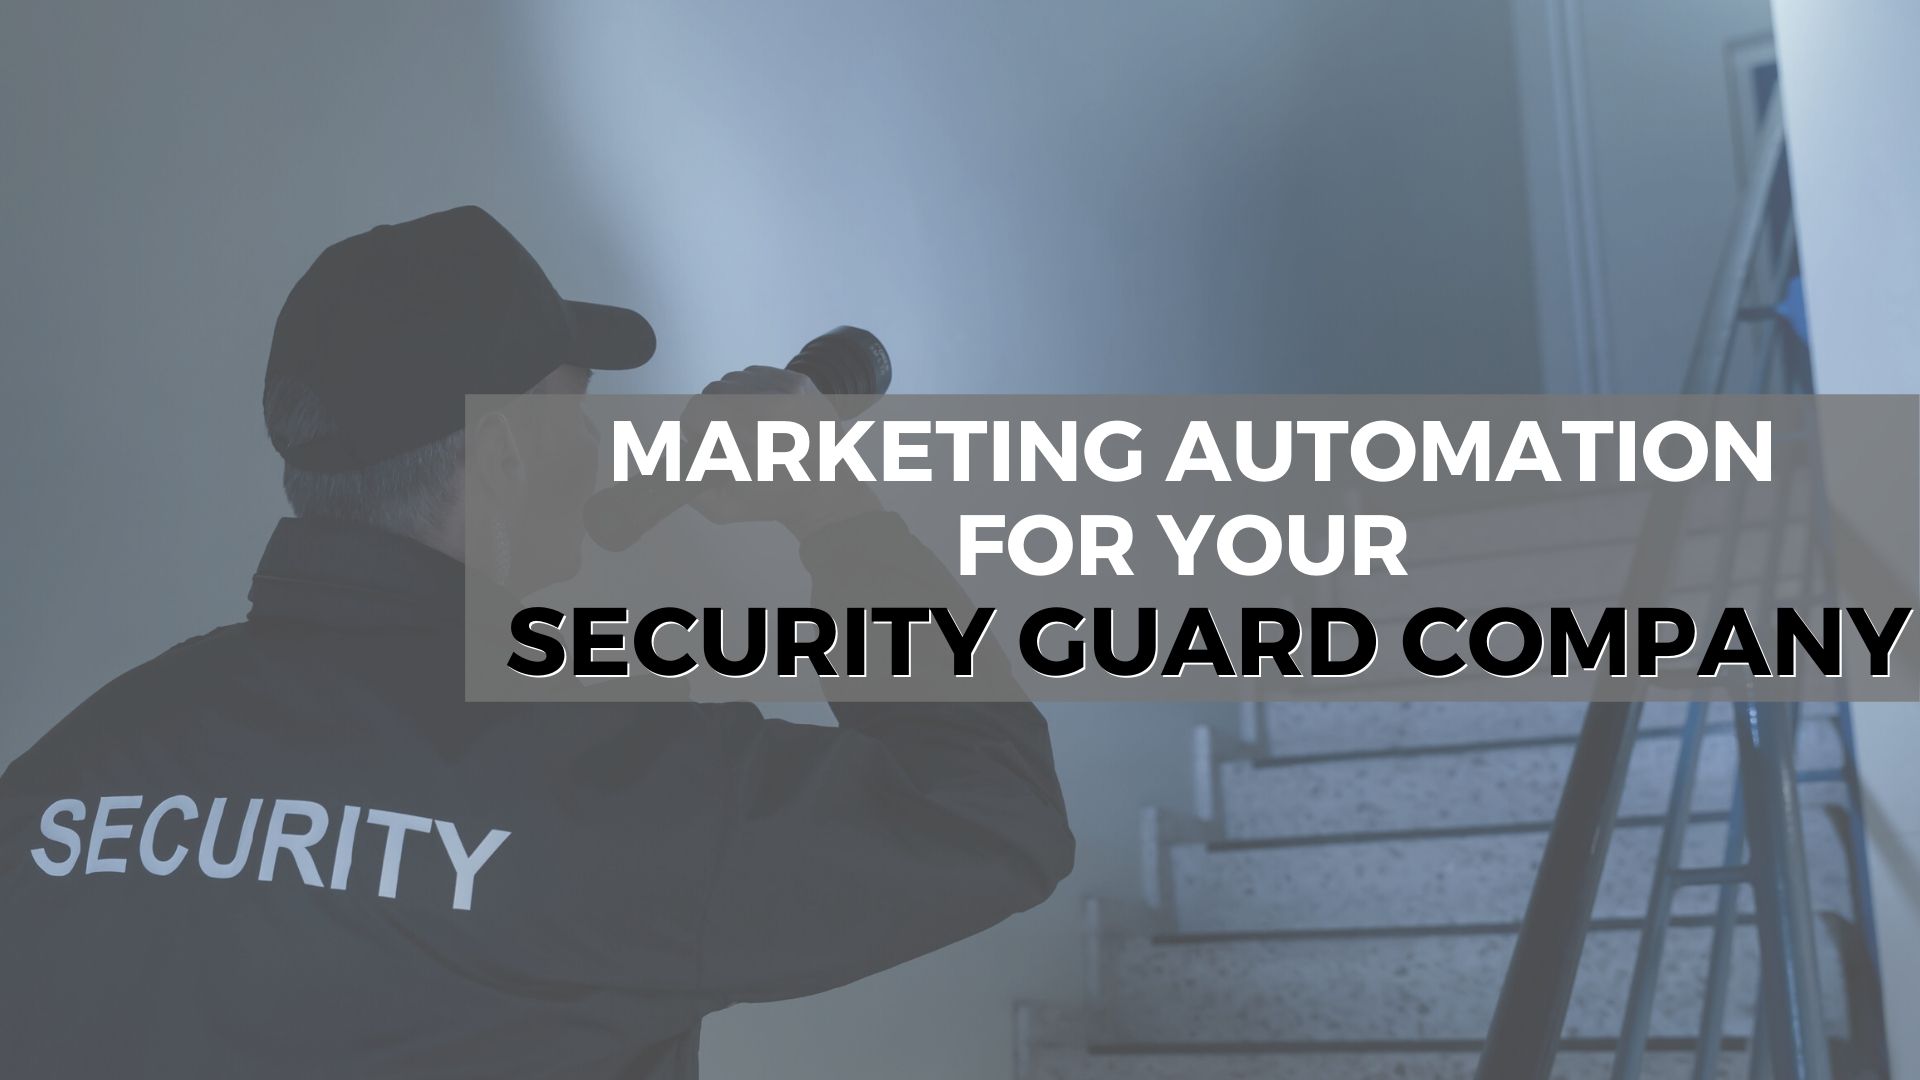 Security-Guard-Company-Marketing